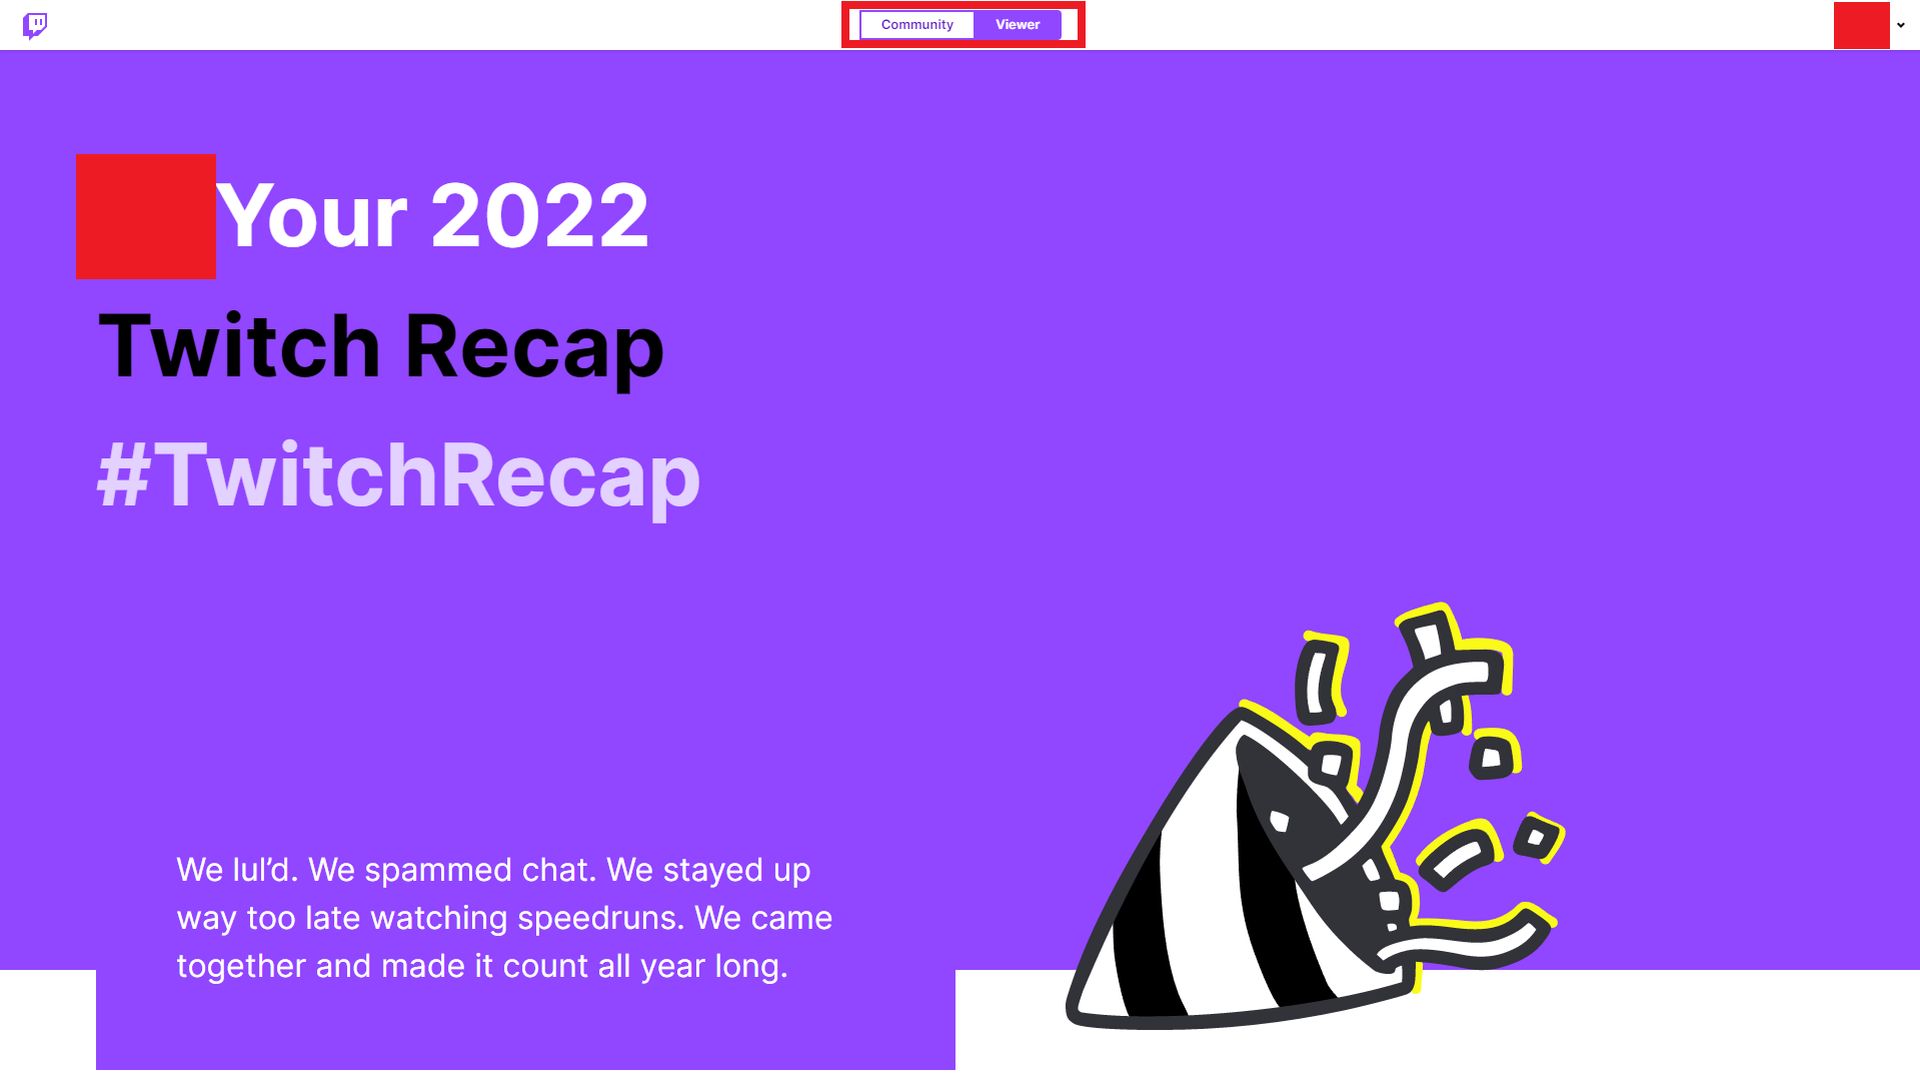 Twitch recap 2022 not working: 